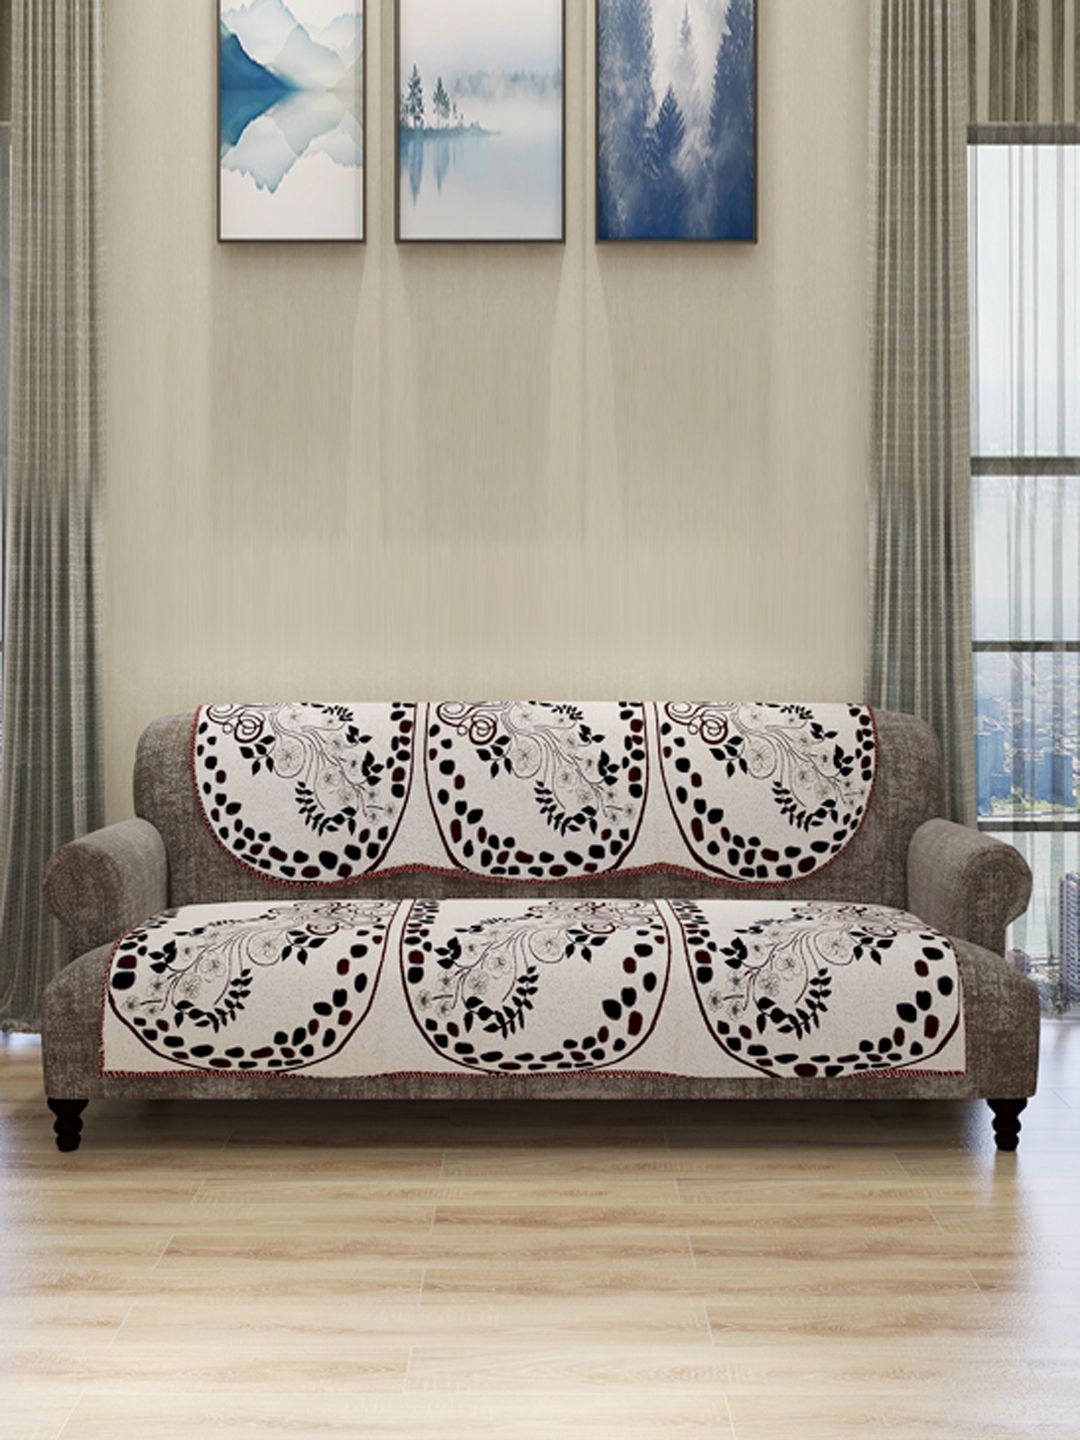 ROMEE Set Of 6 Cream-Colored & Black Printed 5-Seater Sofa Cover Price in India